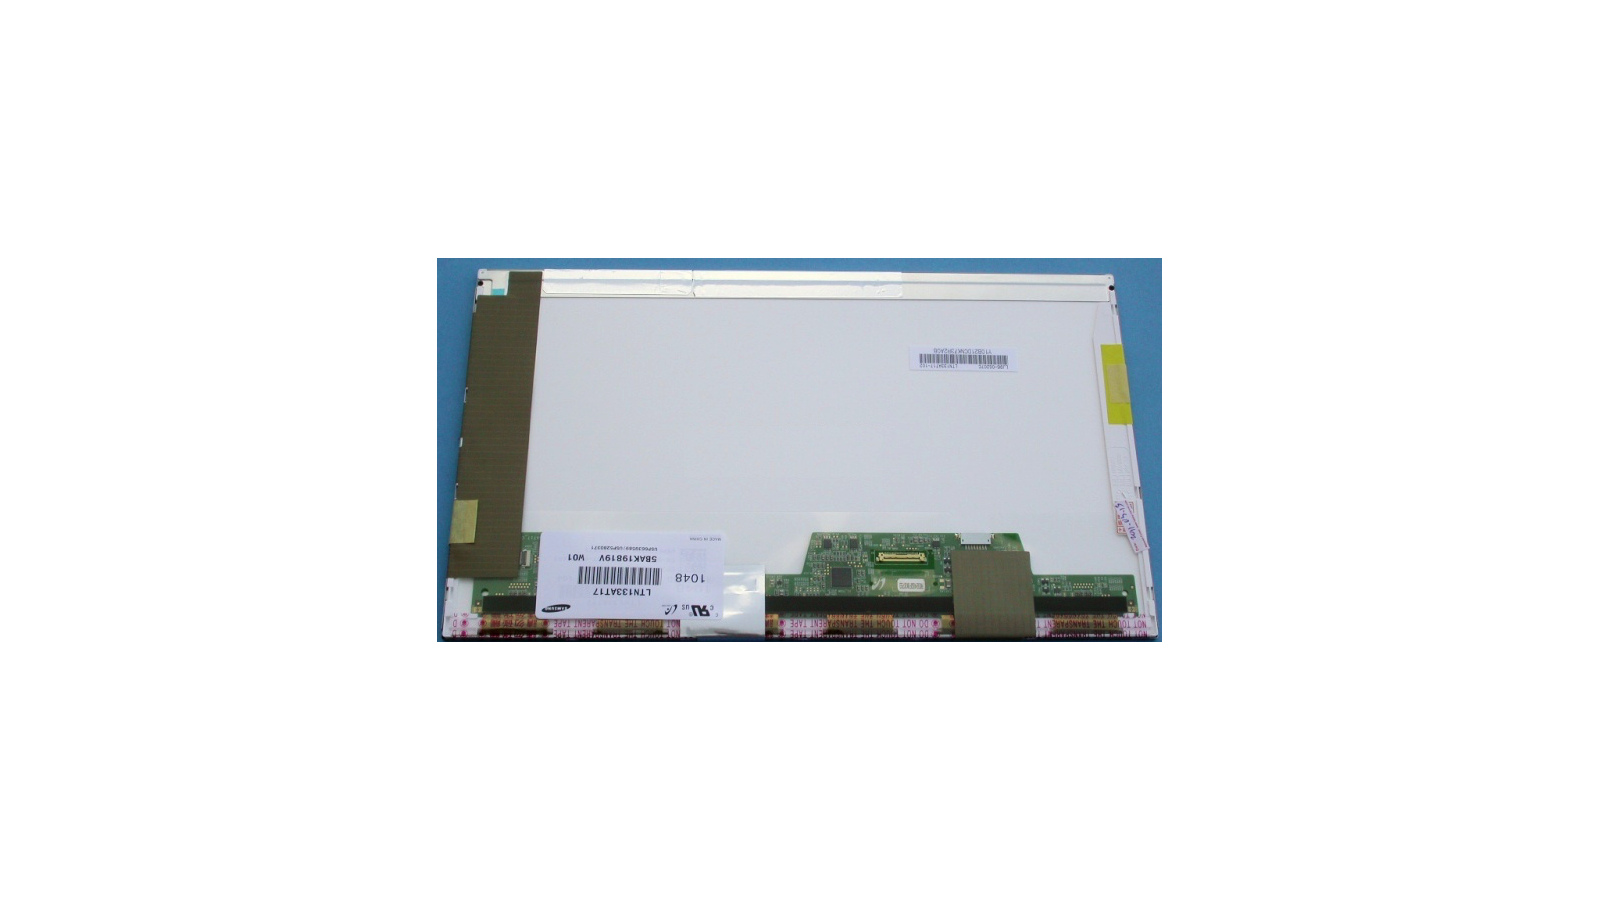 Display LCD Schermo 13,3 Led compatibile con LP133WH1 (TP) (D1)